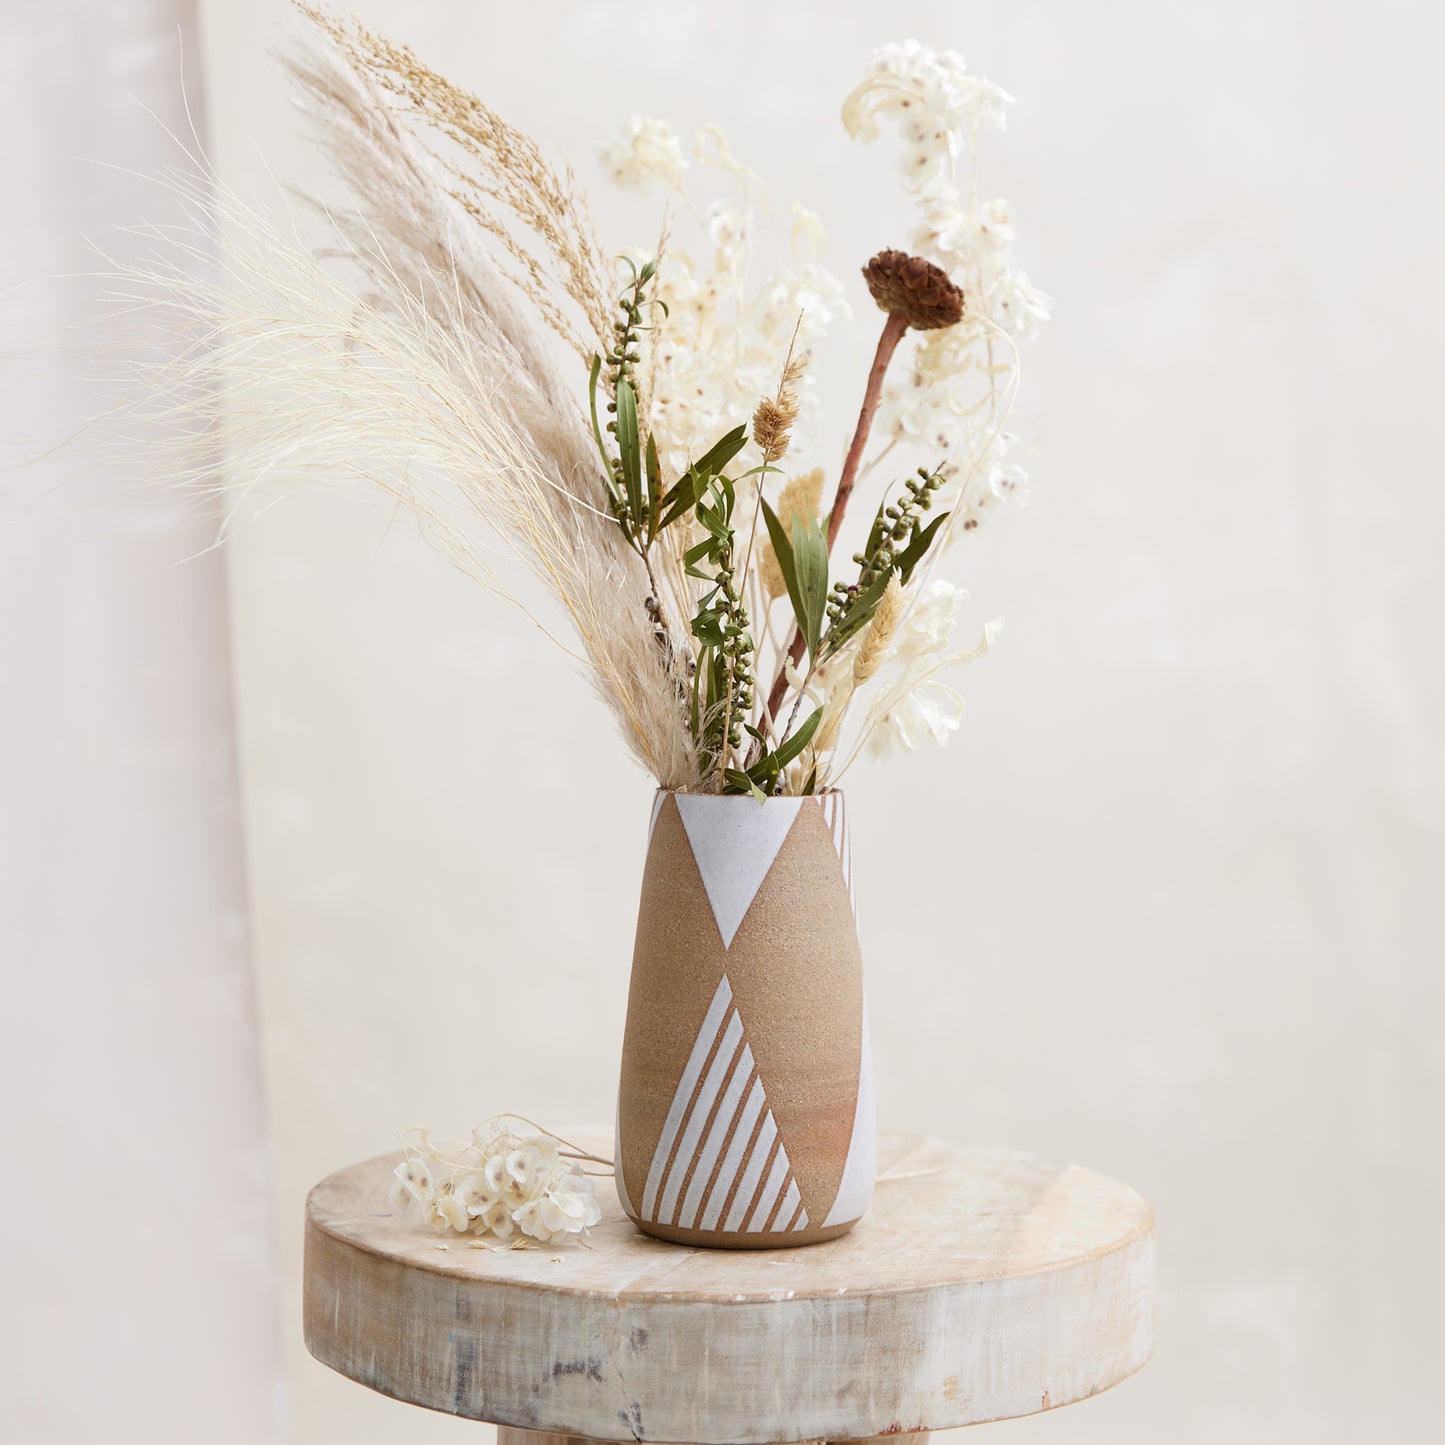 Geometric Handmade Ceramic Teardrop Vase